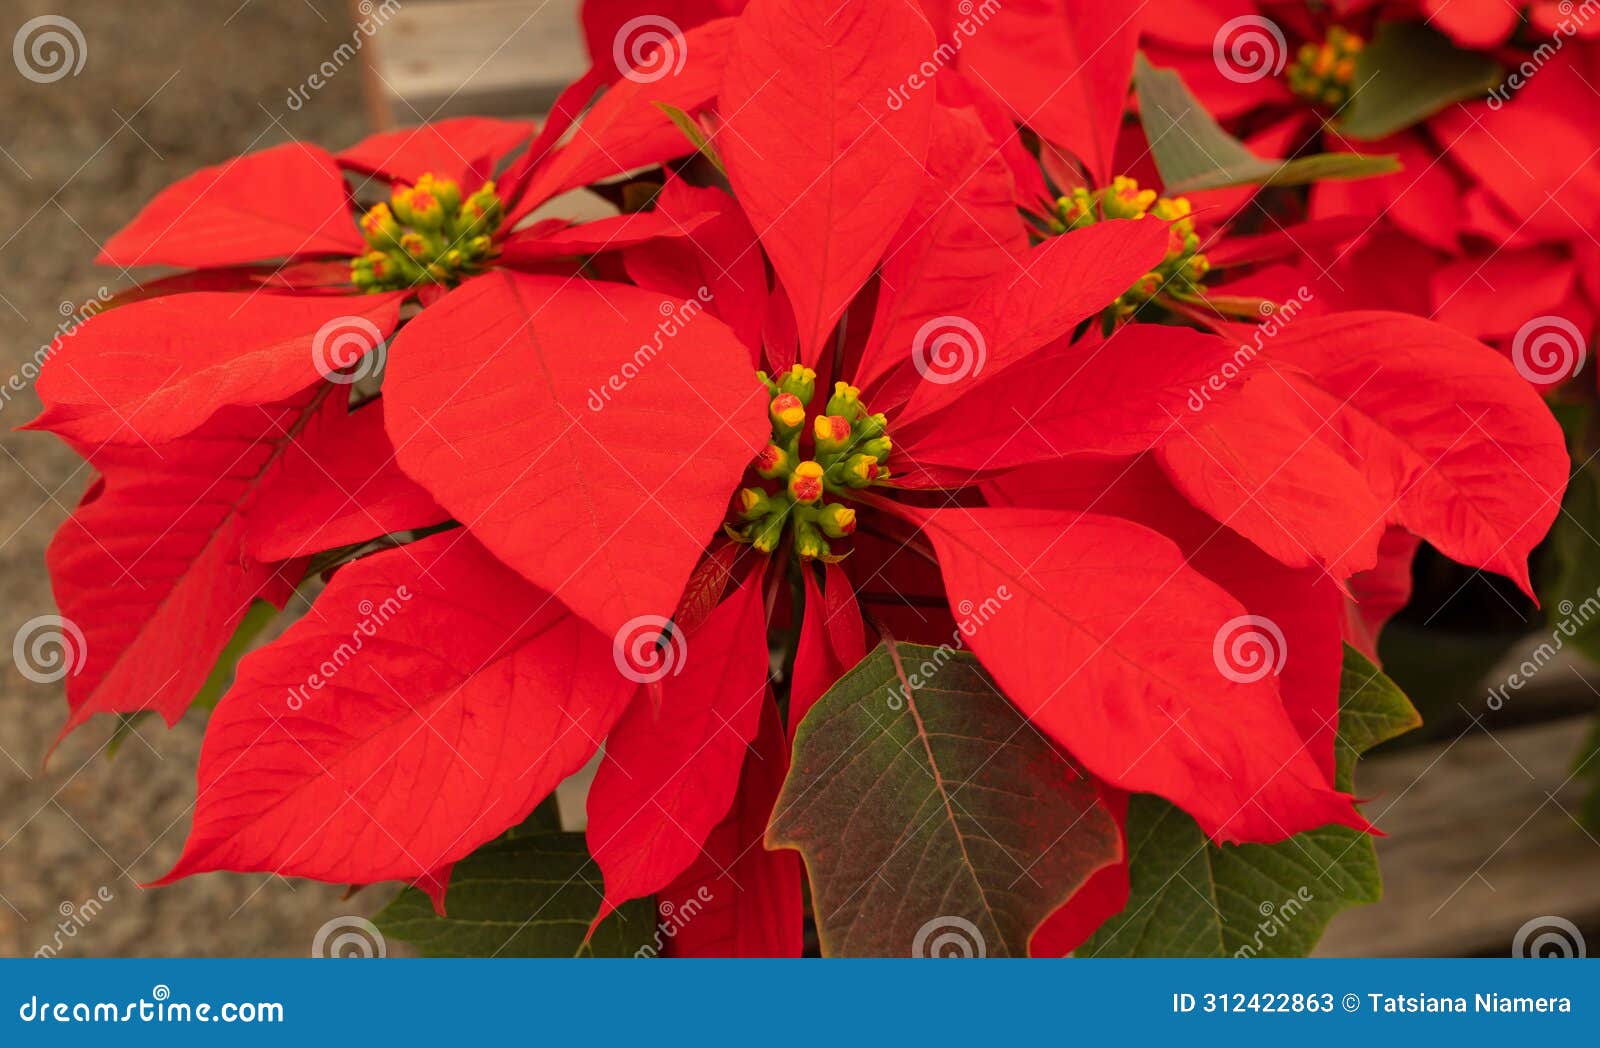 red striking poinsettia flower, with star-d red leaves, christmas eve flower, flor de